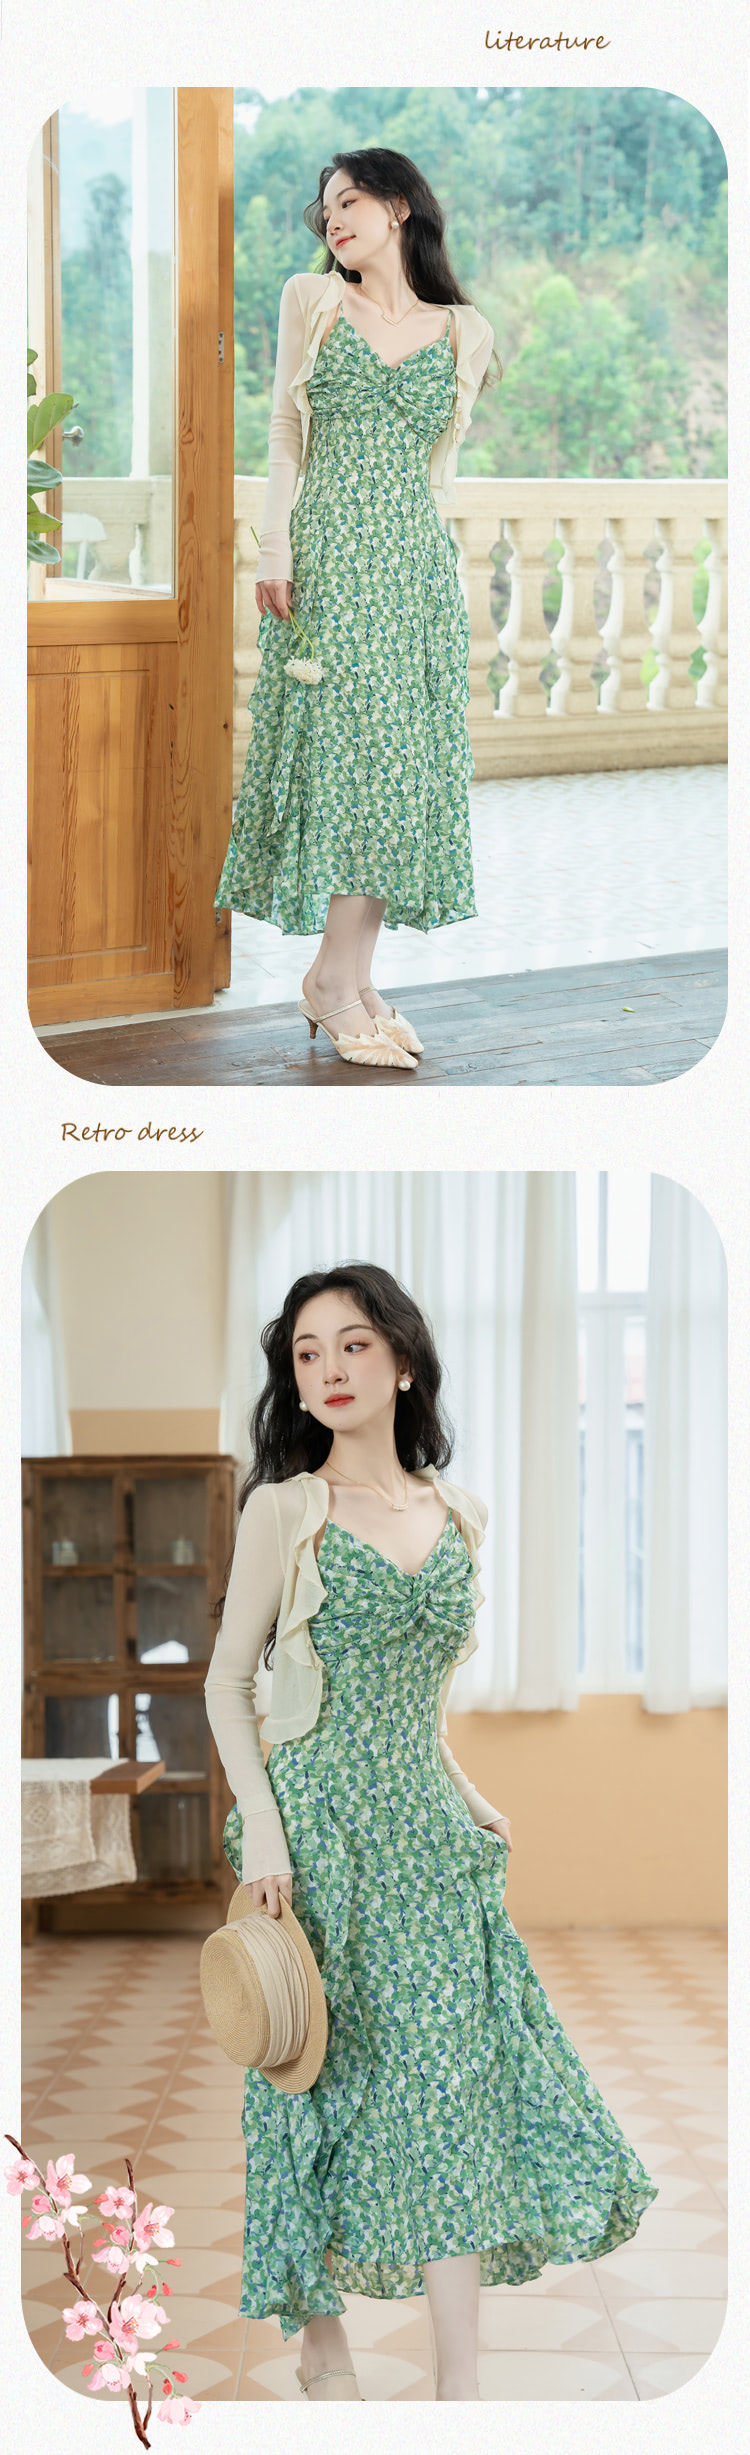 A-Line-Green-Print-Summer-Beach-Casual-Long-Dress-with-Cardigan12